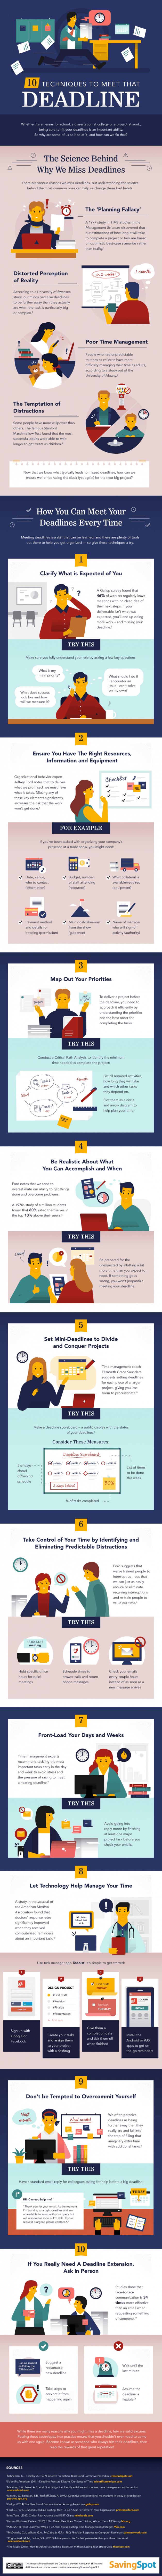 How to Meet every deadline